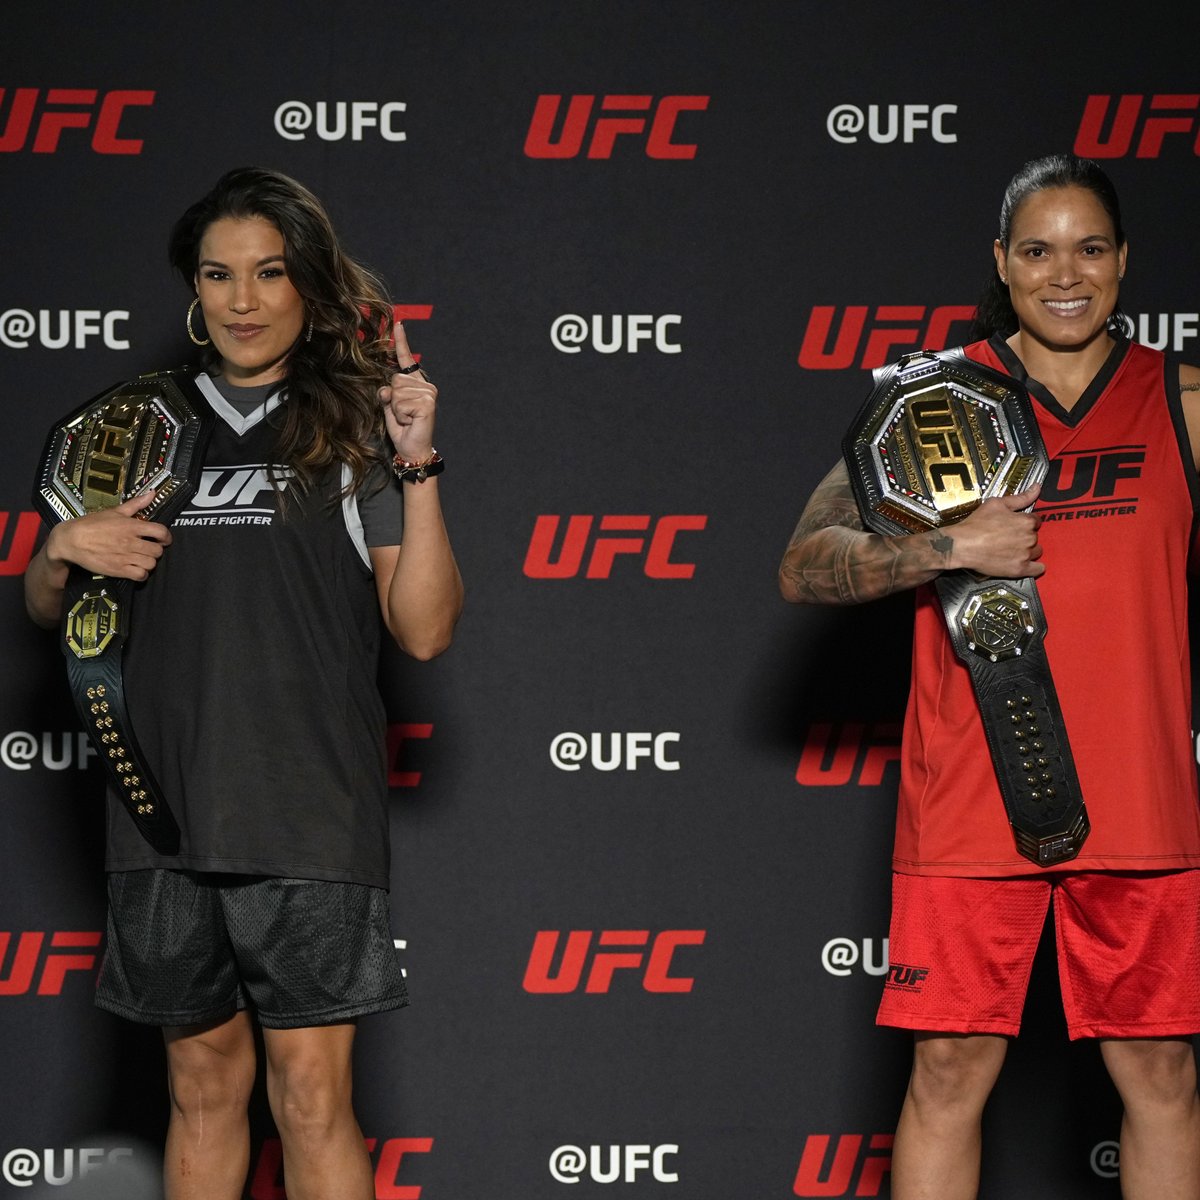 UFC 277: Previewing Julianna Pena vs. Amanda Nunes II and the Rest of the Card https://t.co/wM5uG5RAsP https://t.co/uIFru8cvTR